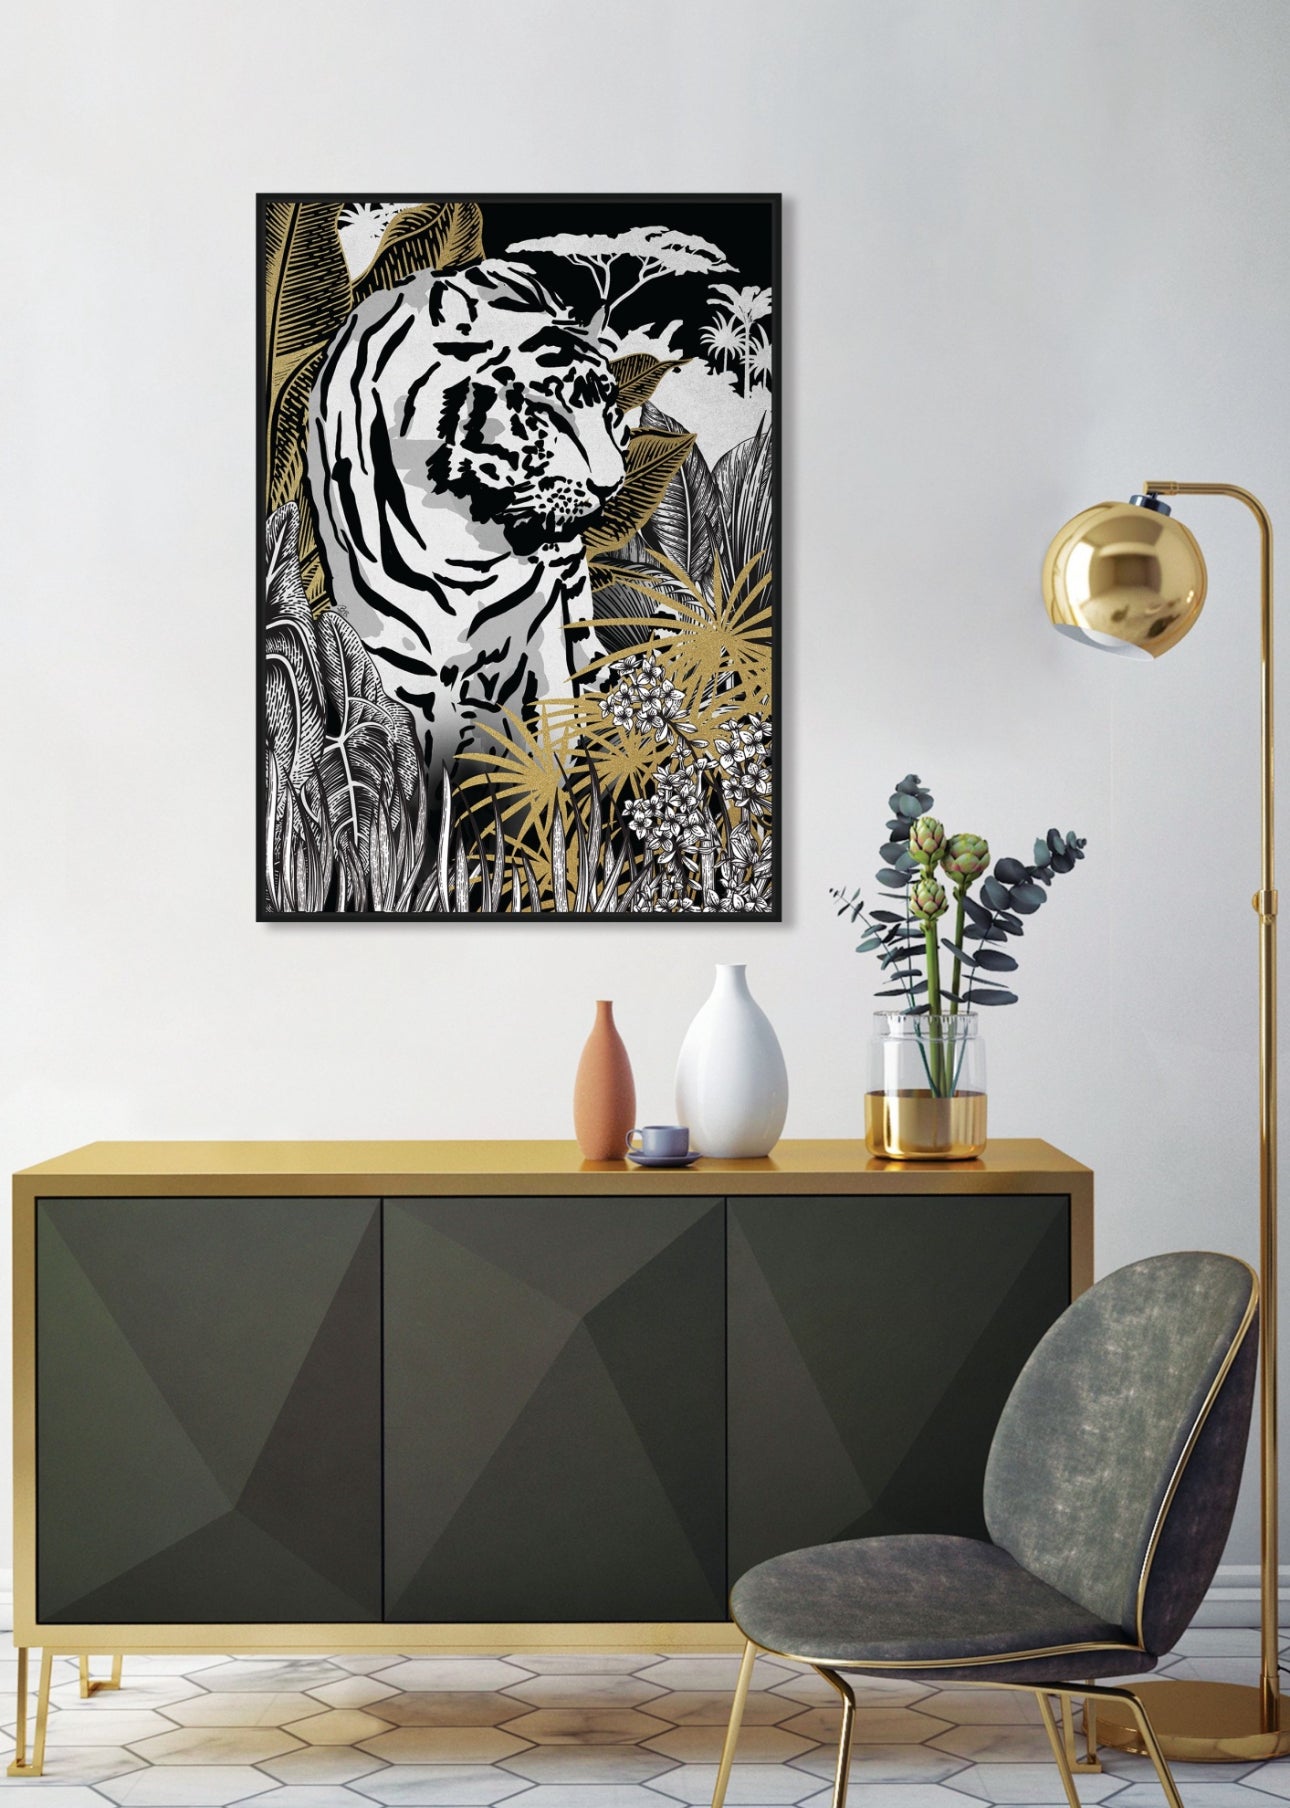 Golden Bengal Framed Canvas